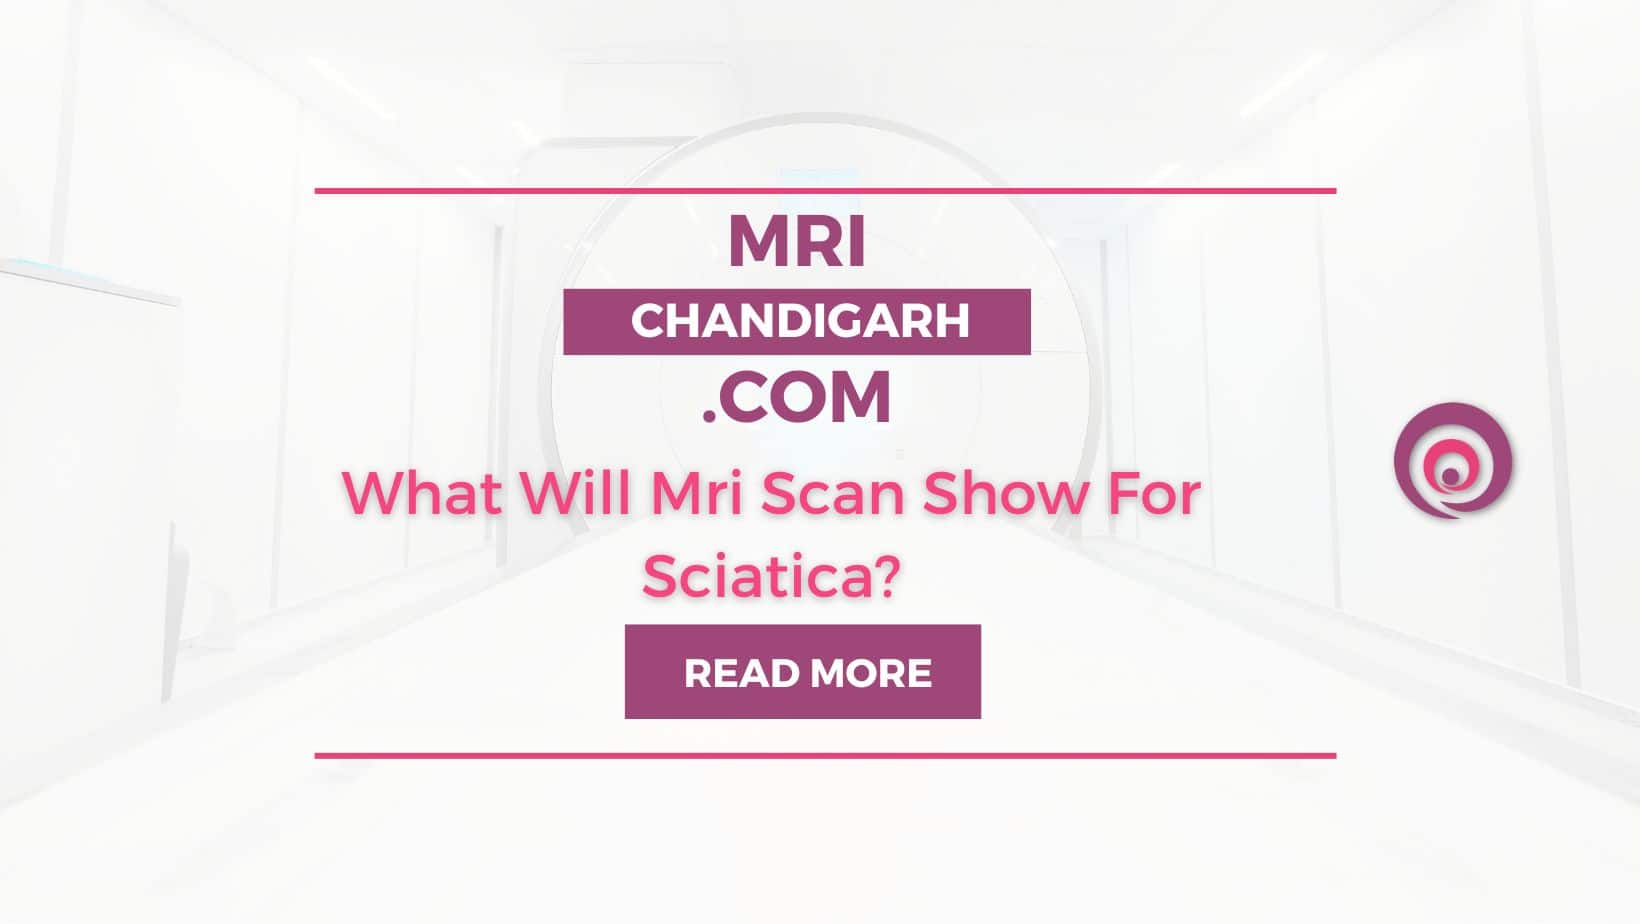 What Will Mri Scan Show For Sciatica?